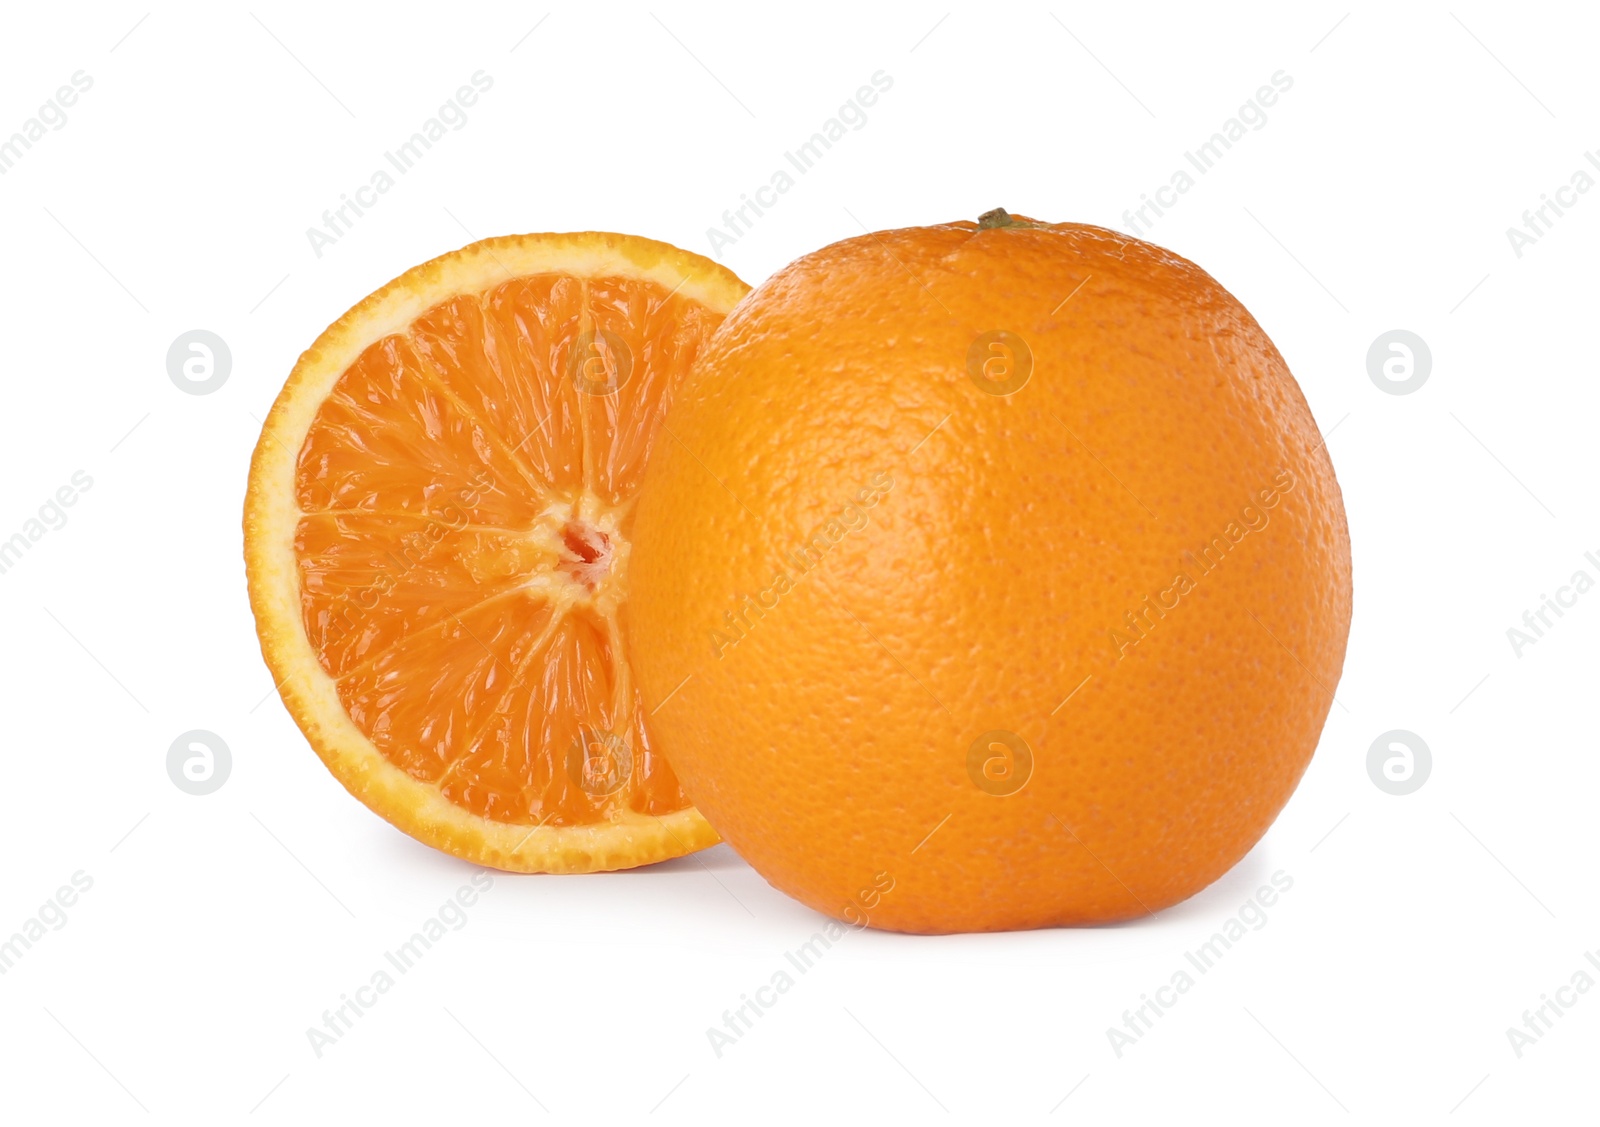 Photo of Cut and whole ripe oranges on white background